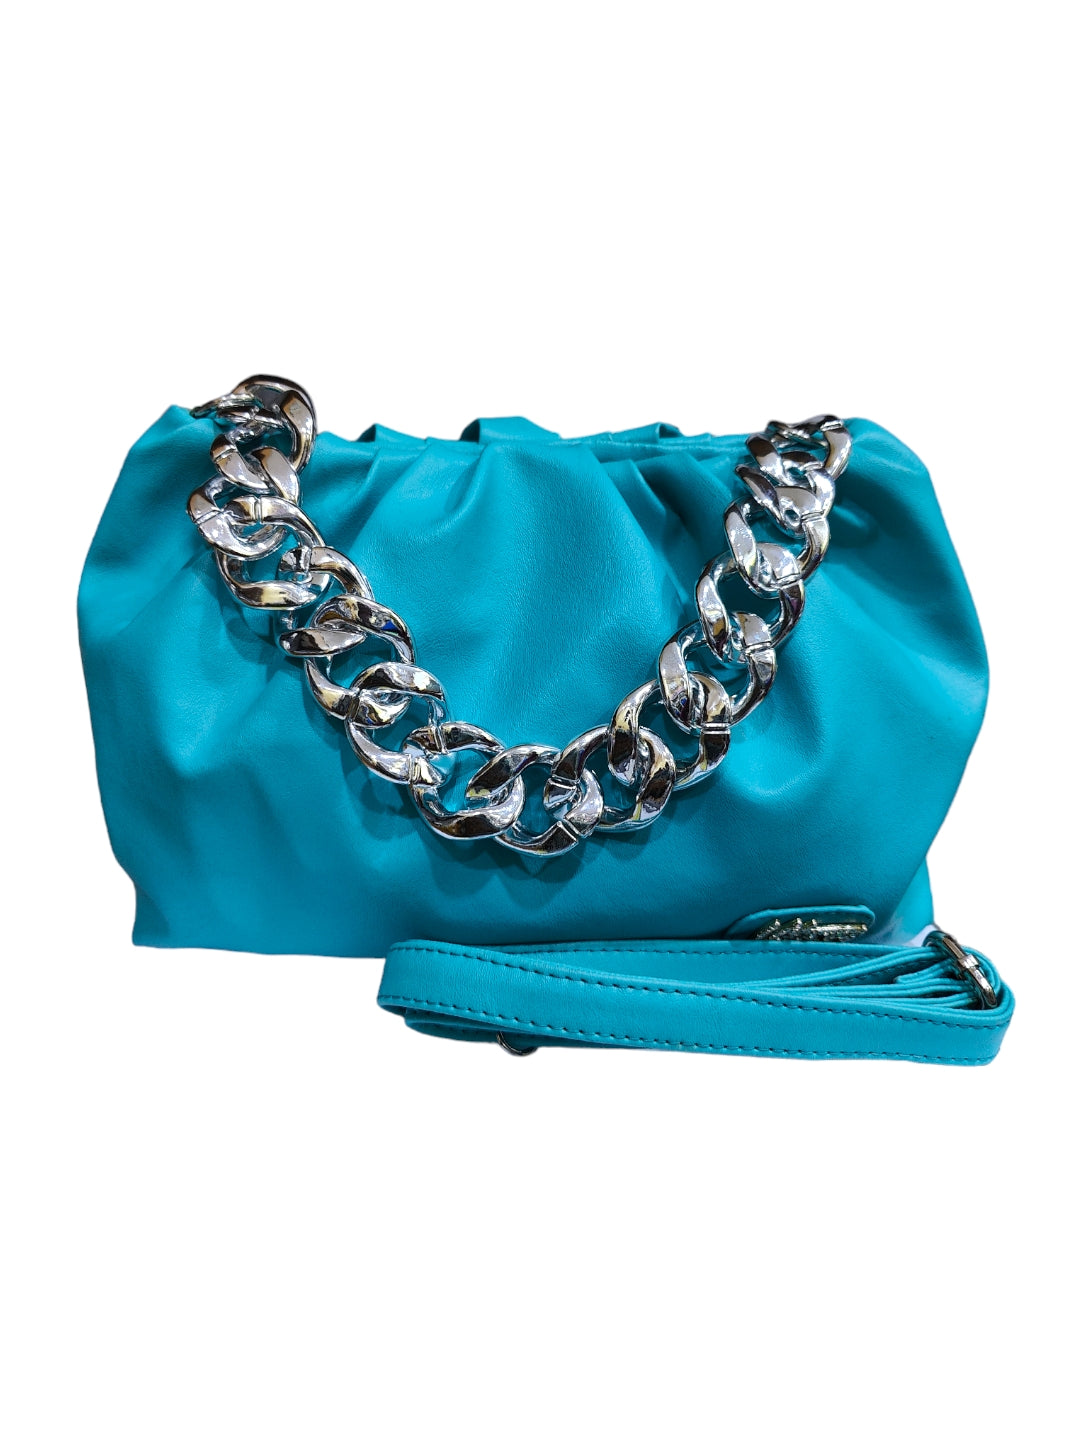 Trendy blue sling bag for ladies. 